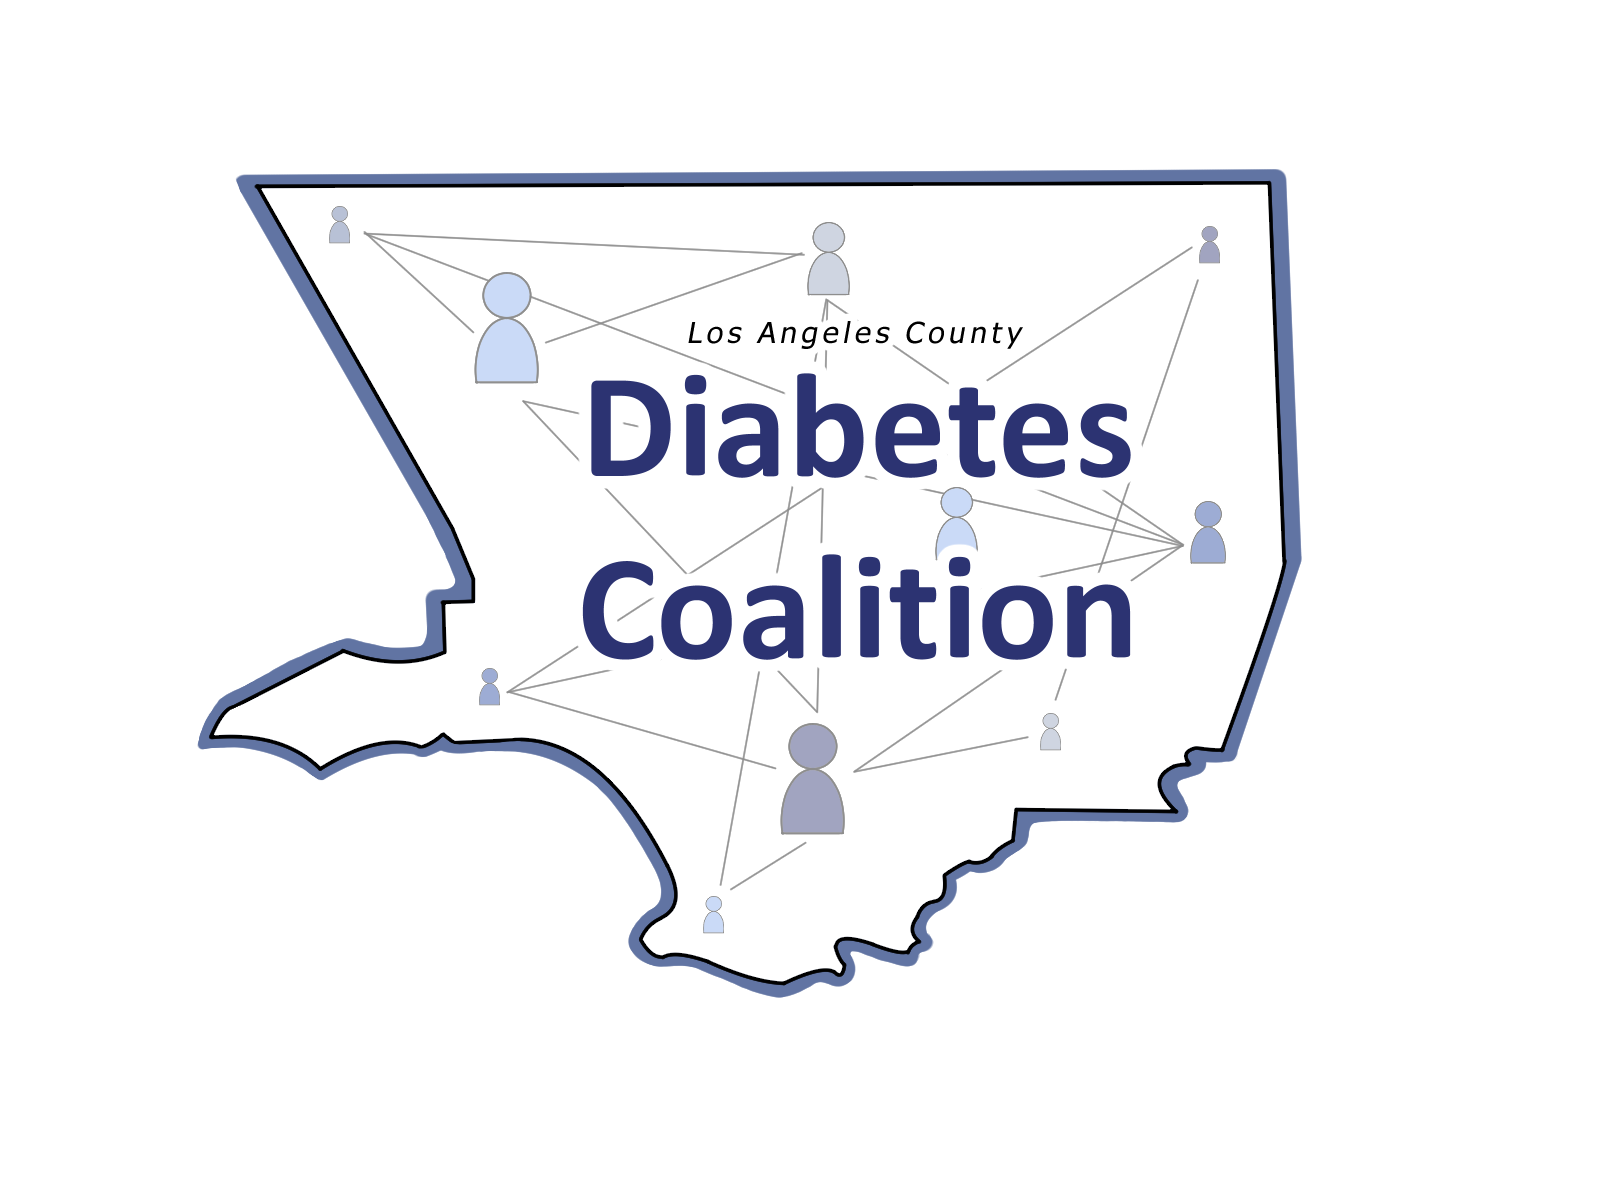 Los Angeles County Diabetes Coalition